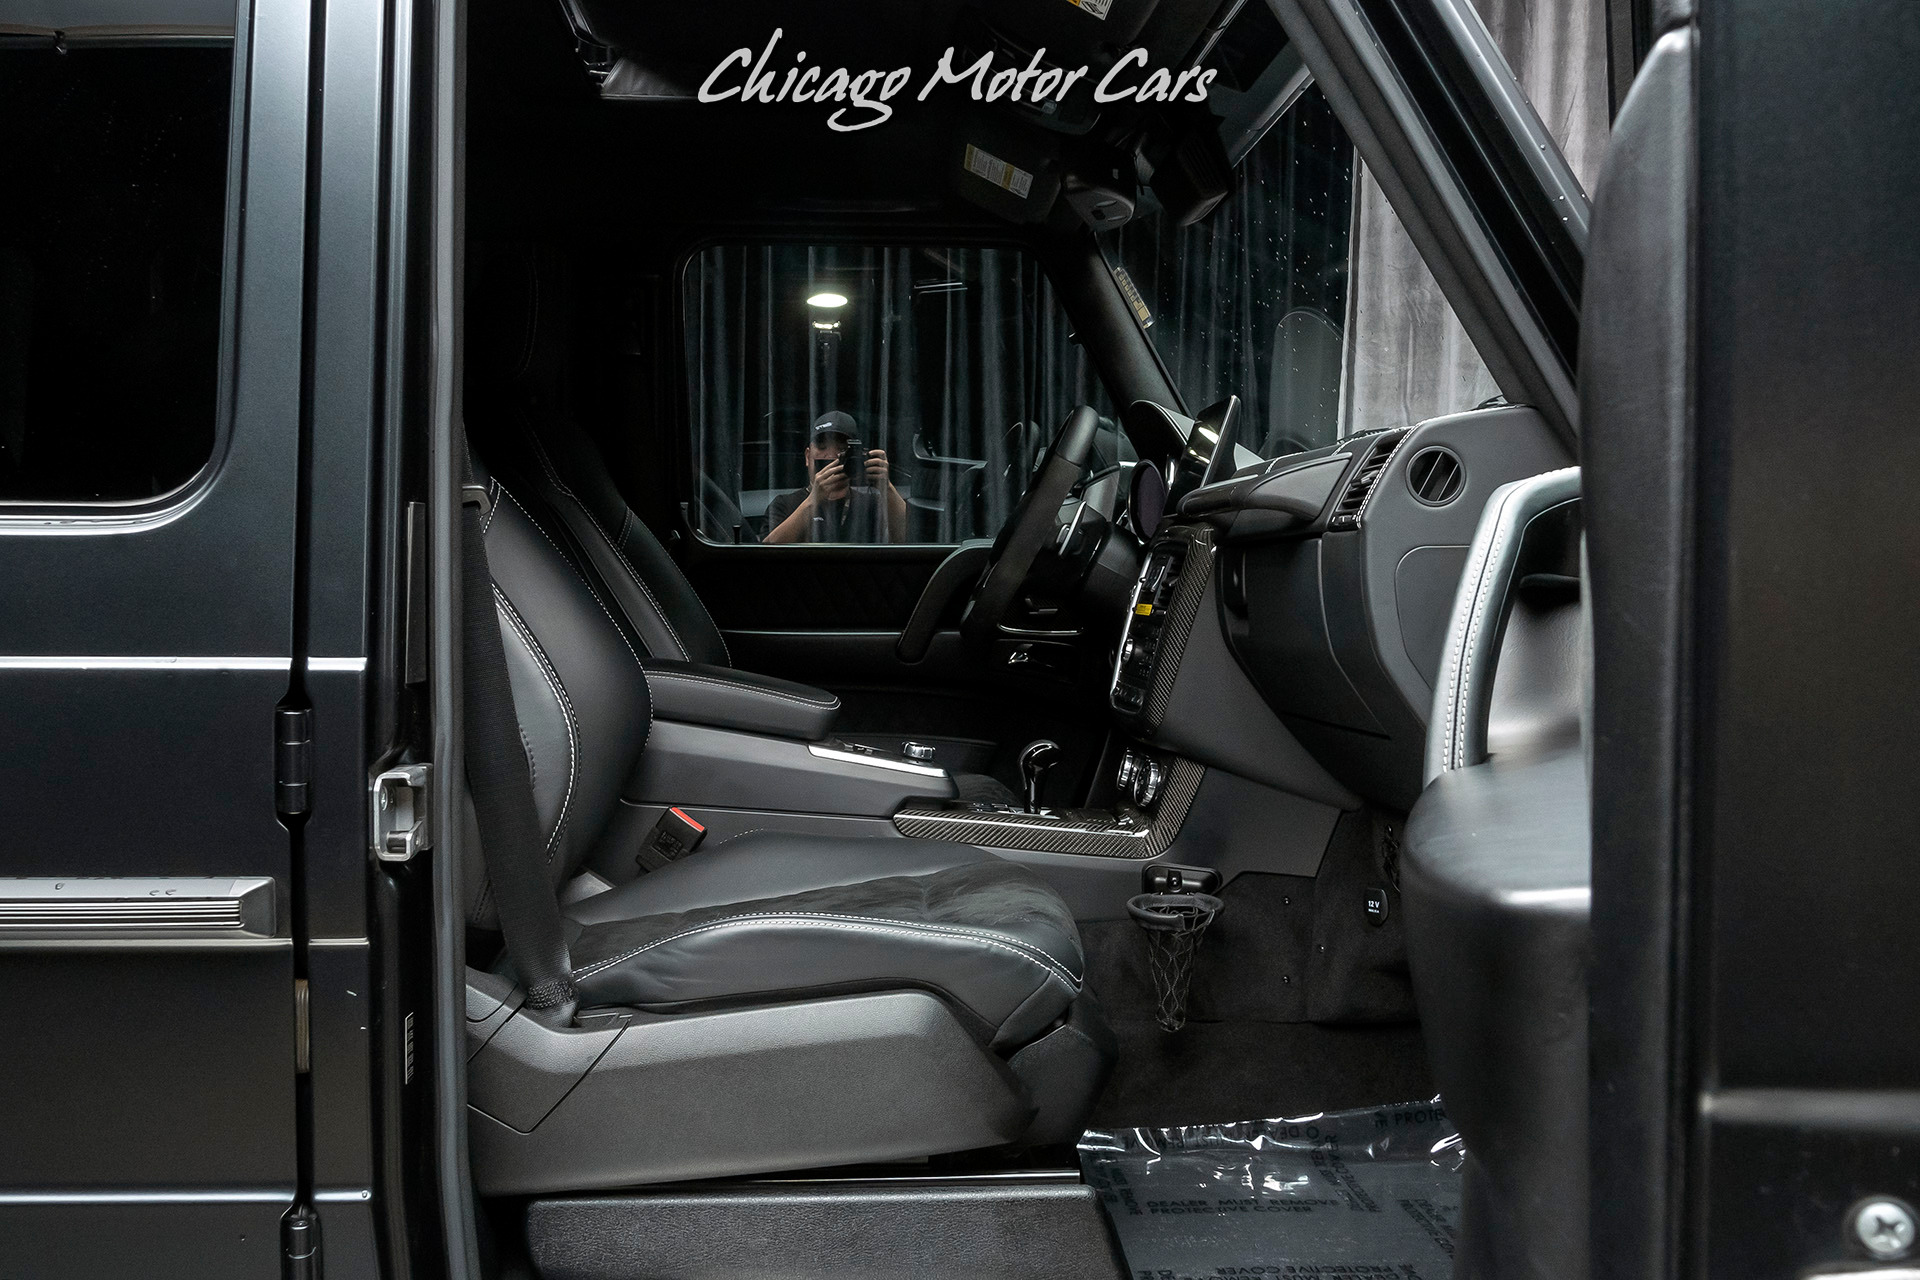 Used-2017-Mercedes-Benz-G550-4x4-Squared-SUV-Brabus-Package-Matte-Black-LOADED-Carbon-Fiber